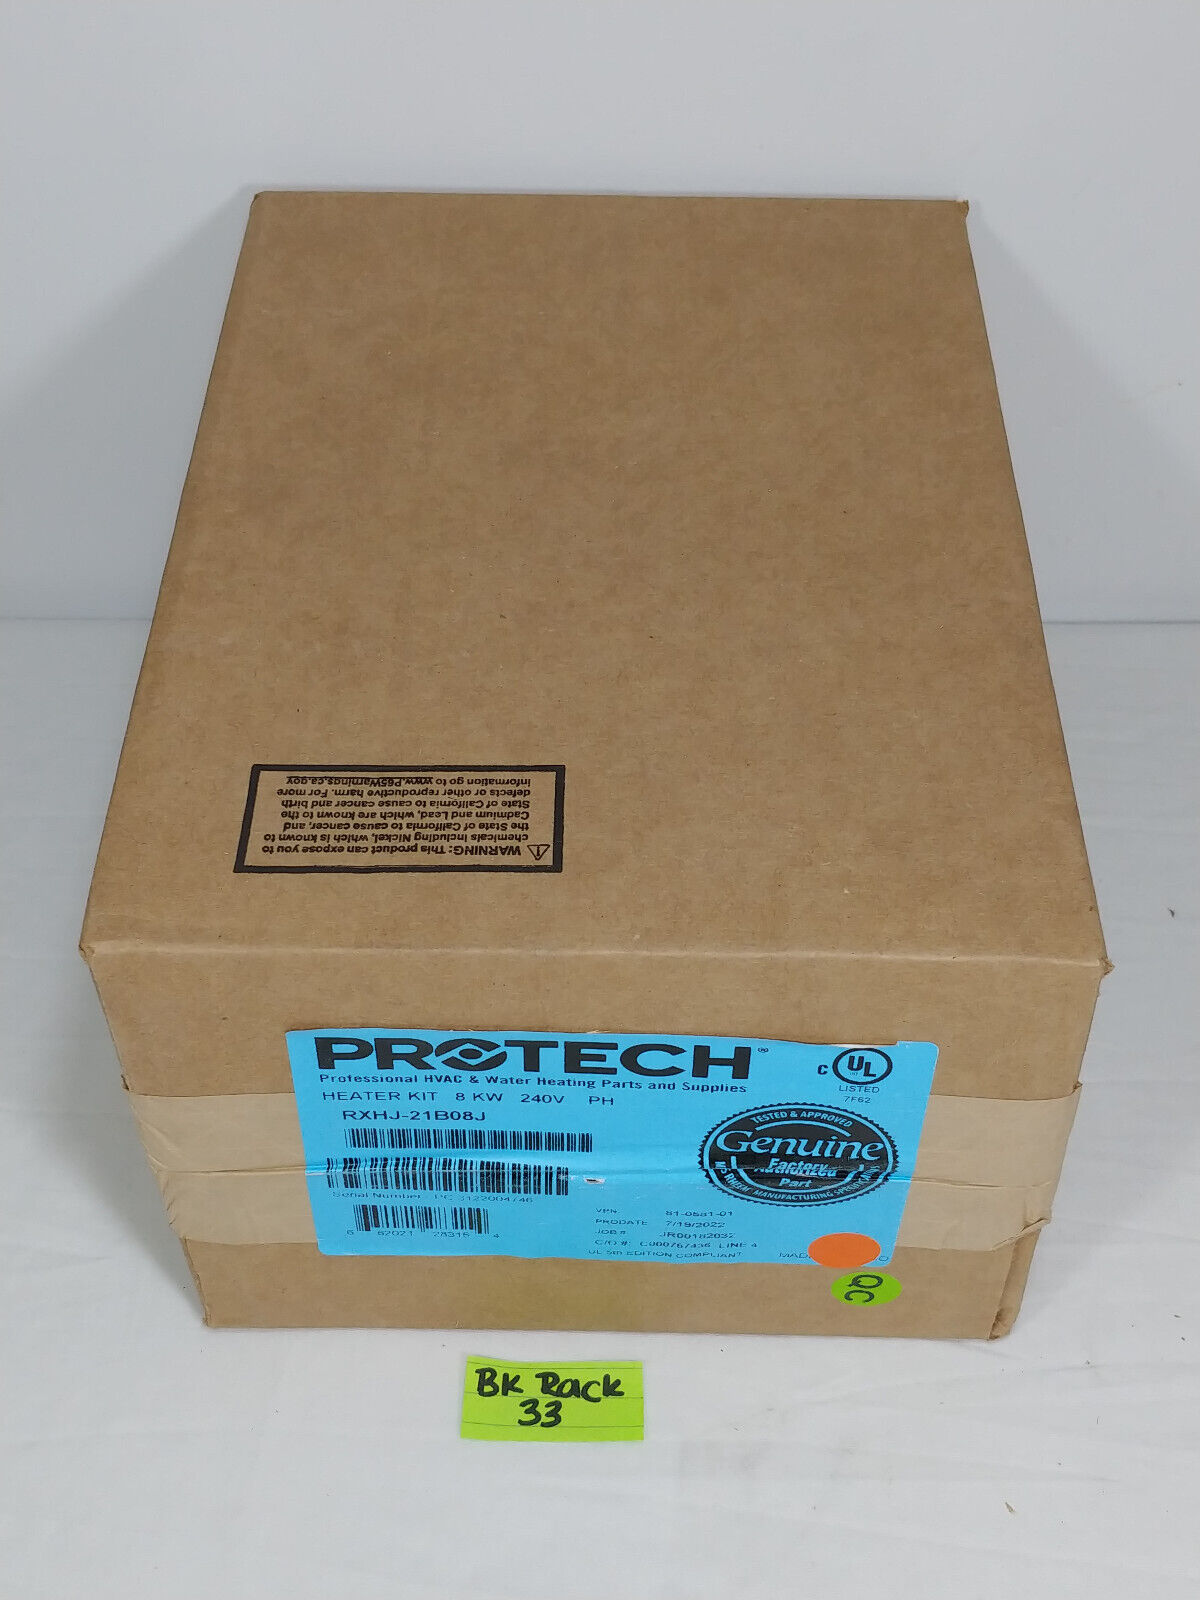 Protech RXHJ-21B08J / RXHJ21B08J Heater Kit 8KW 240V